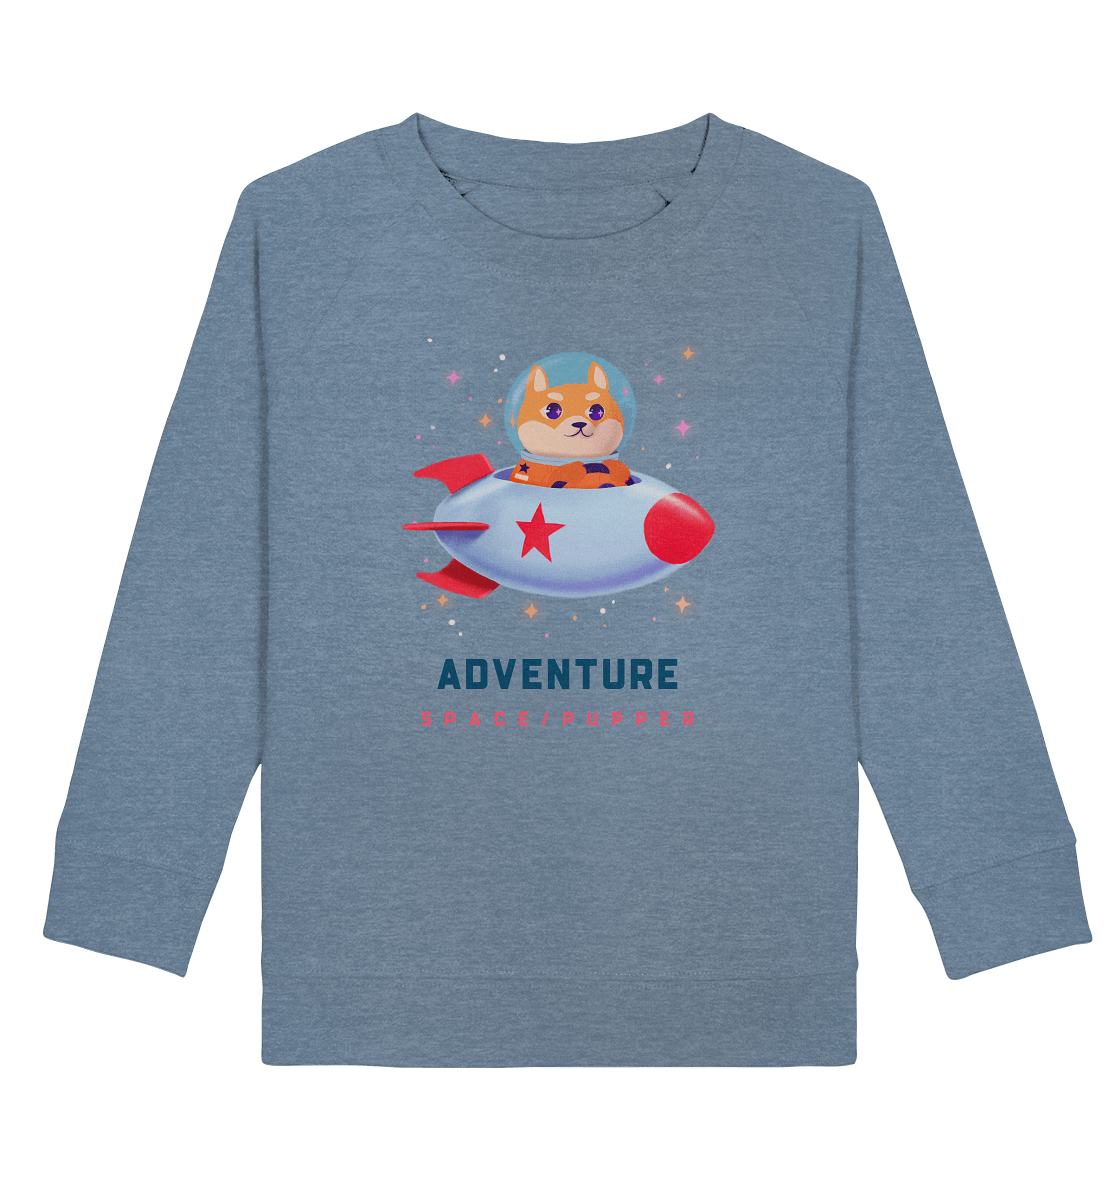 Kinder Sweatshirt "Space Pupper"